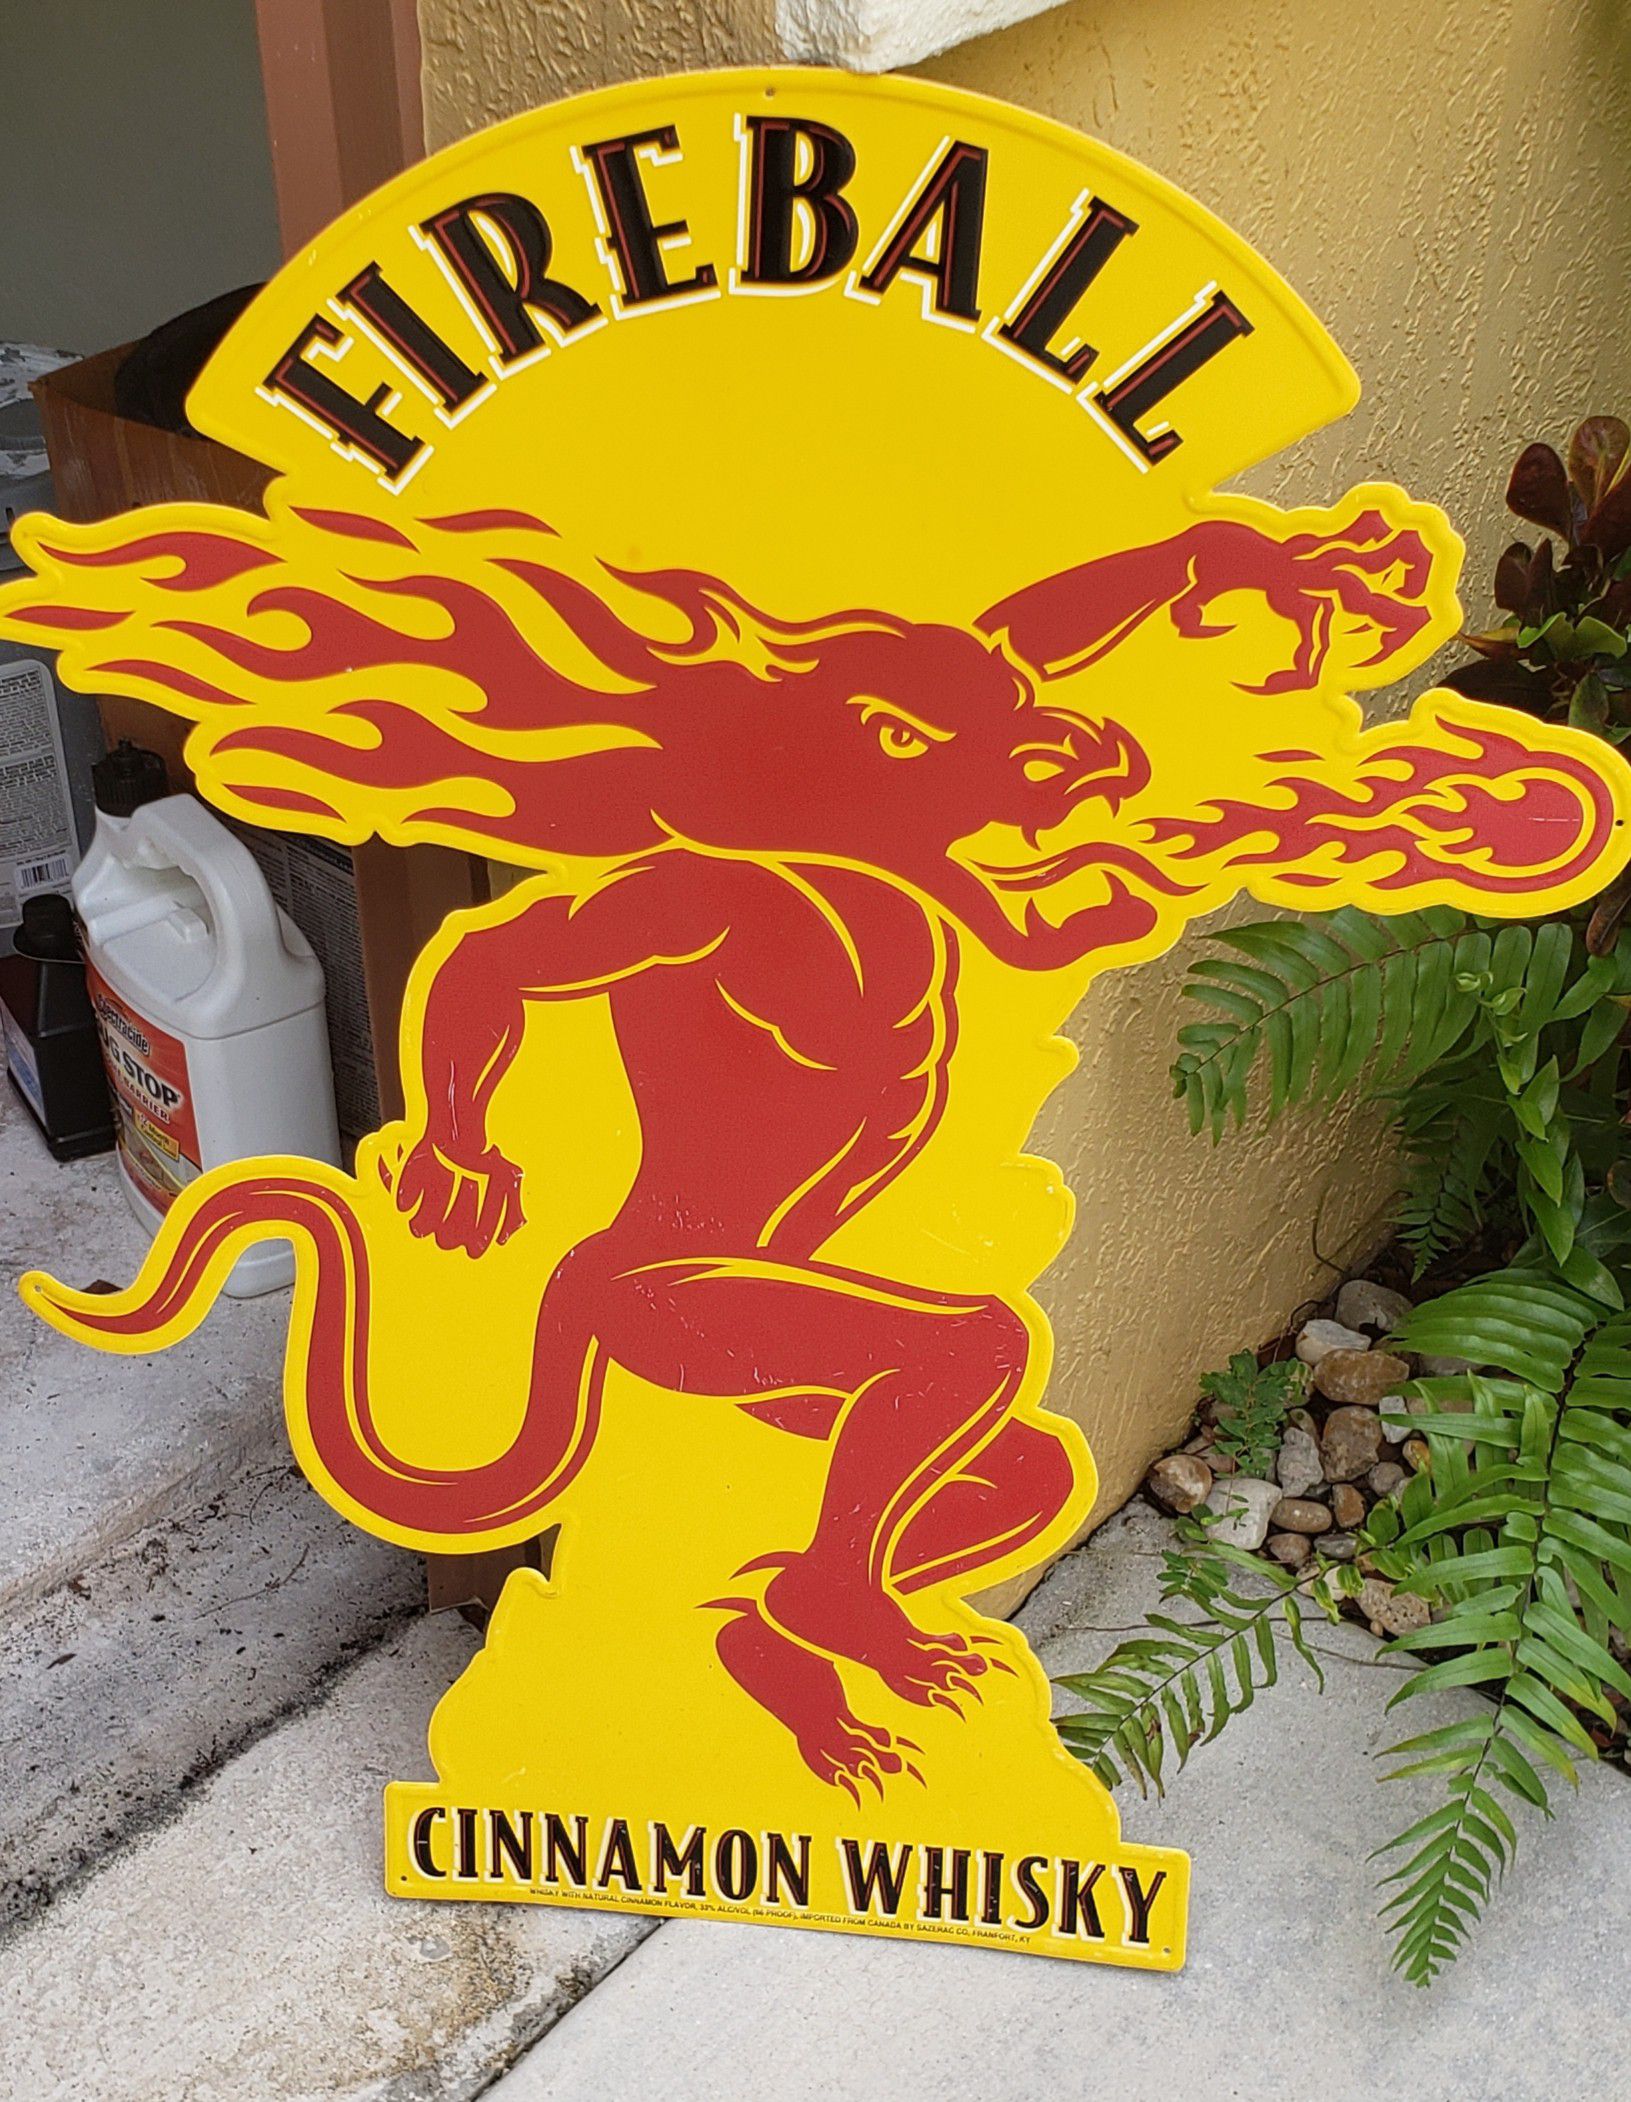 Large fireball bar sign